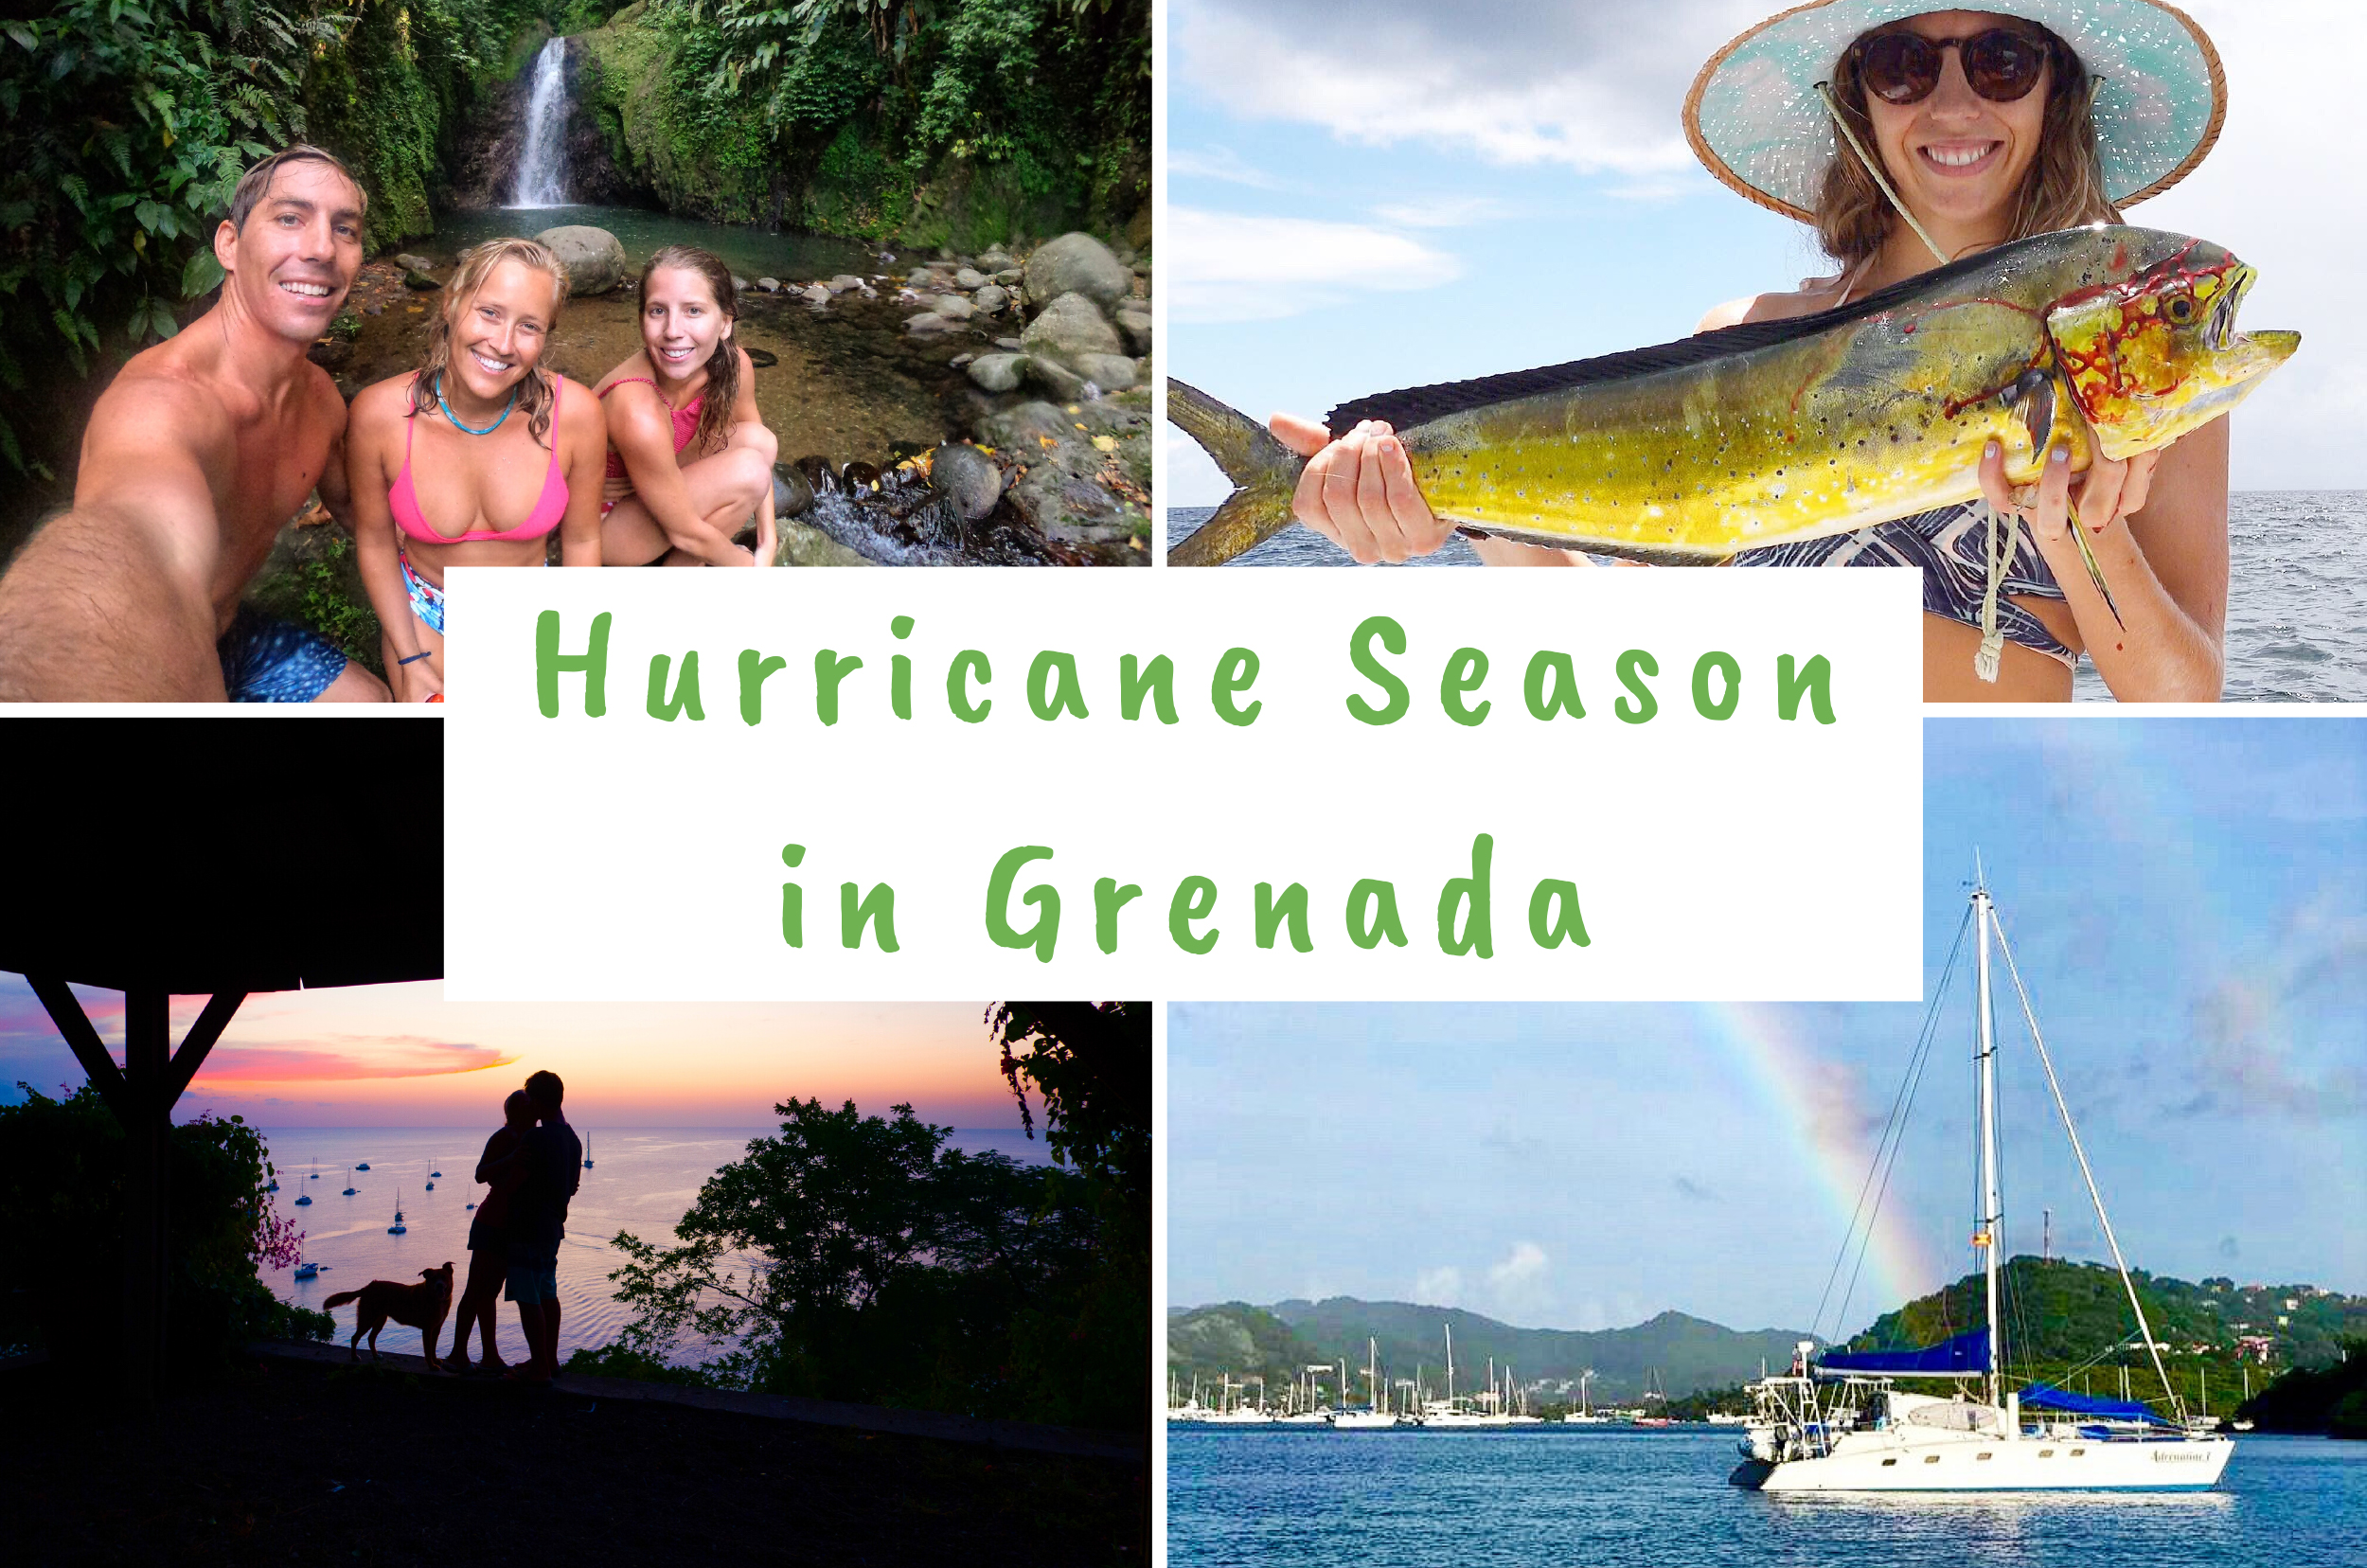 Hurricane Season in Grenada